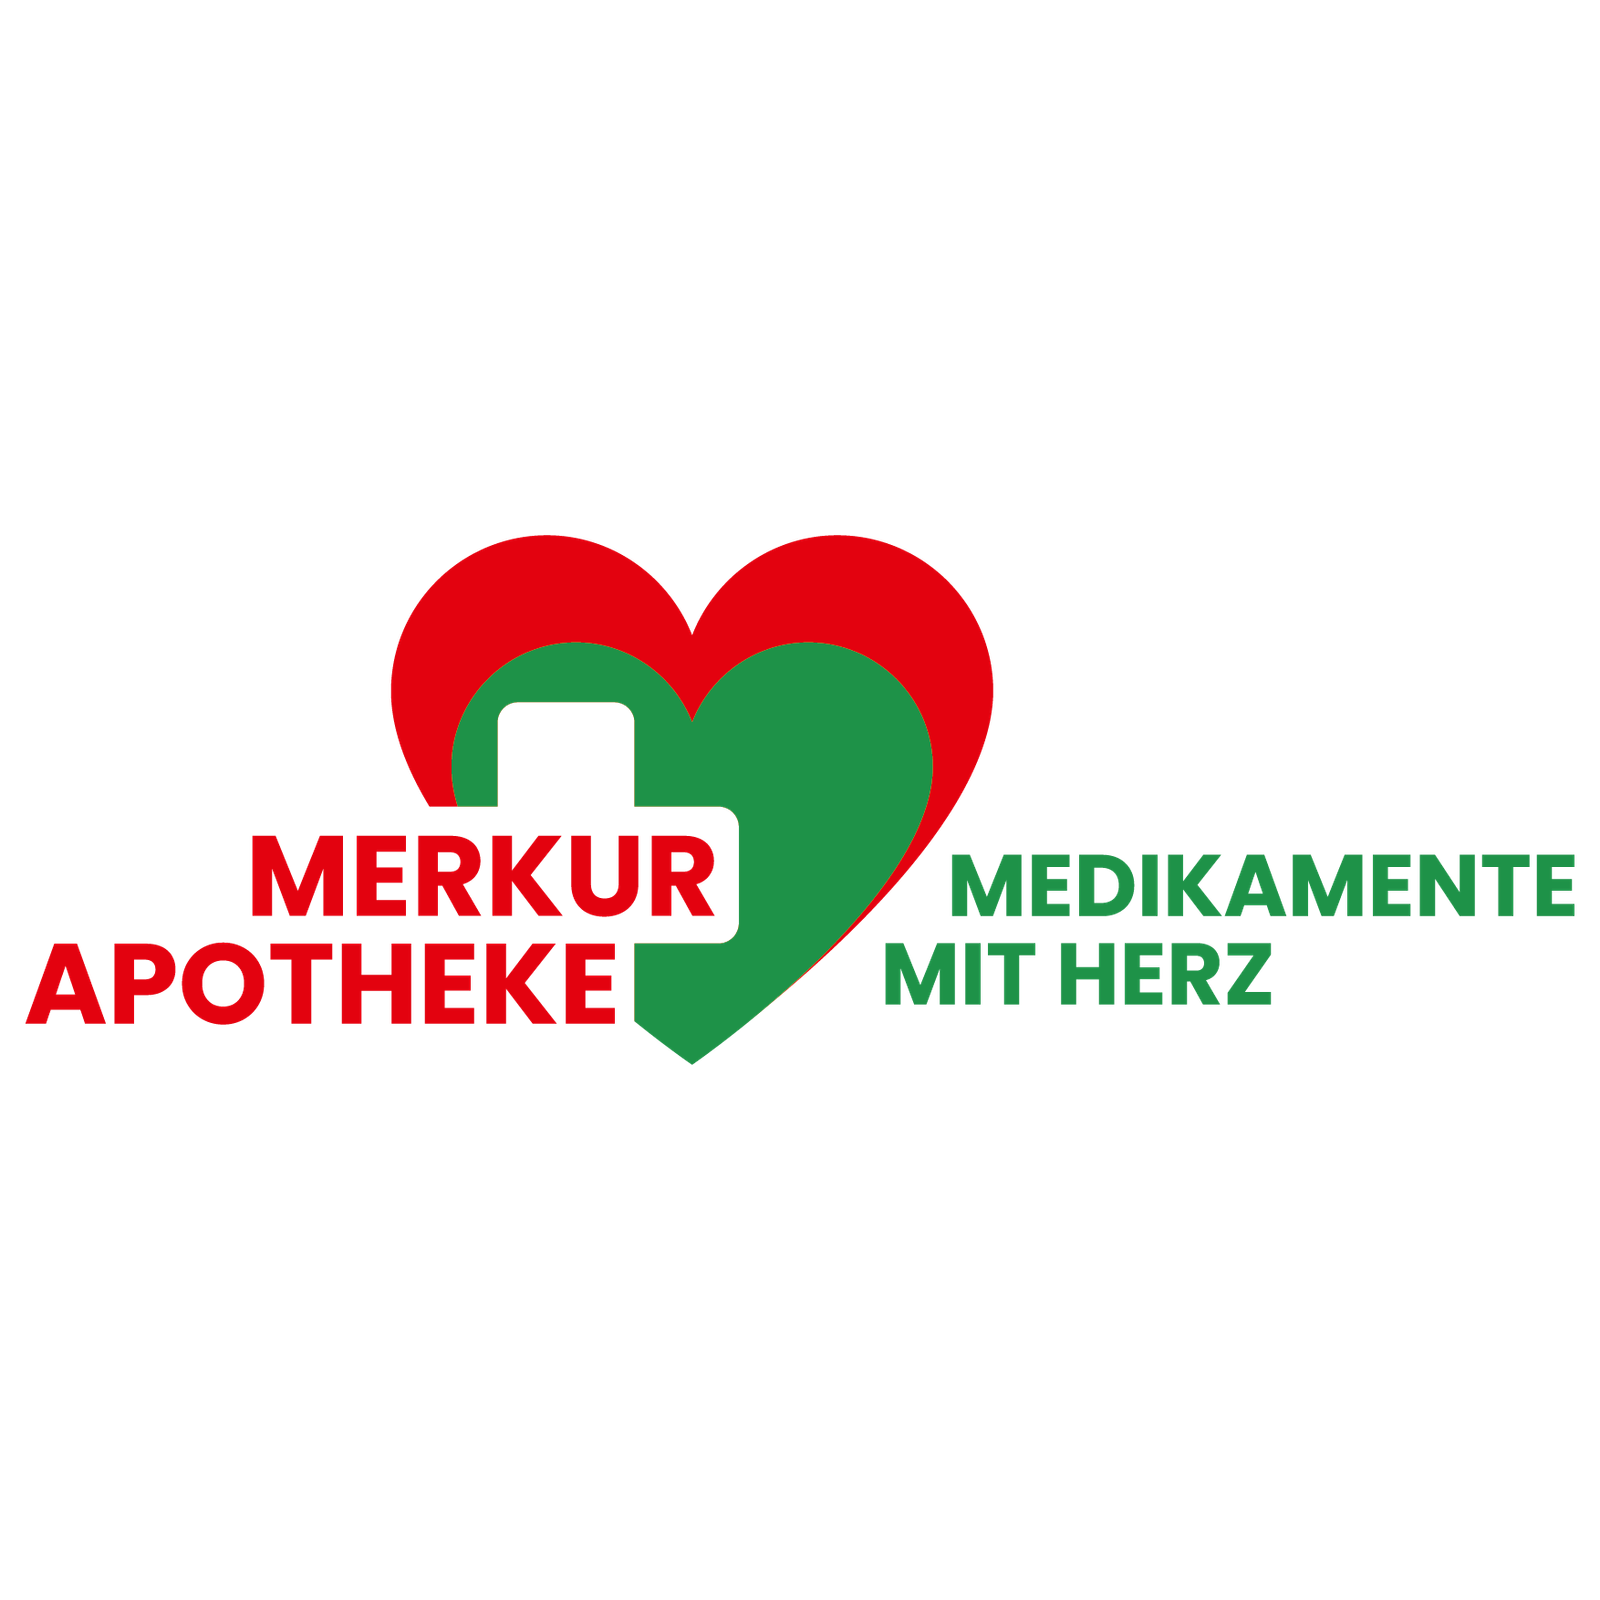 Merkur-Apotheke Logo